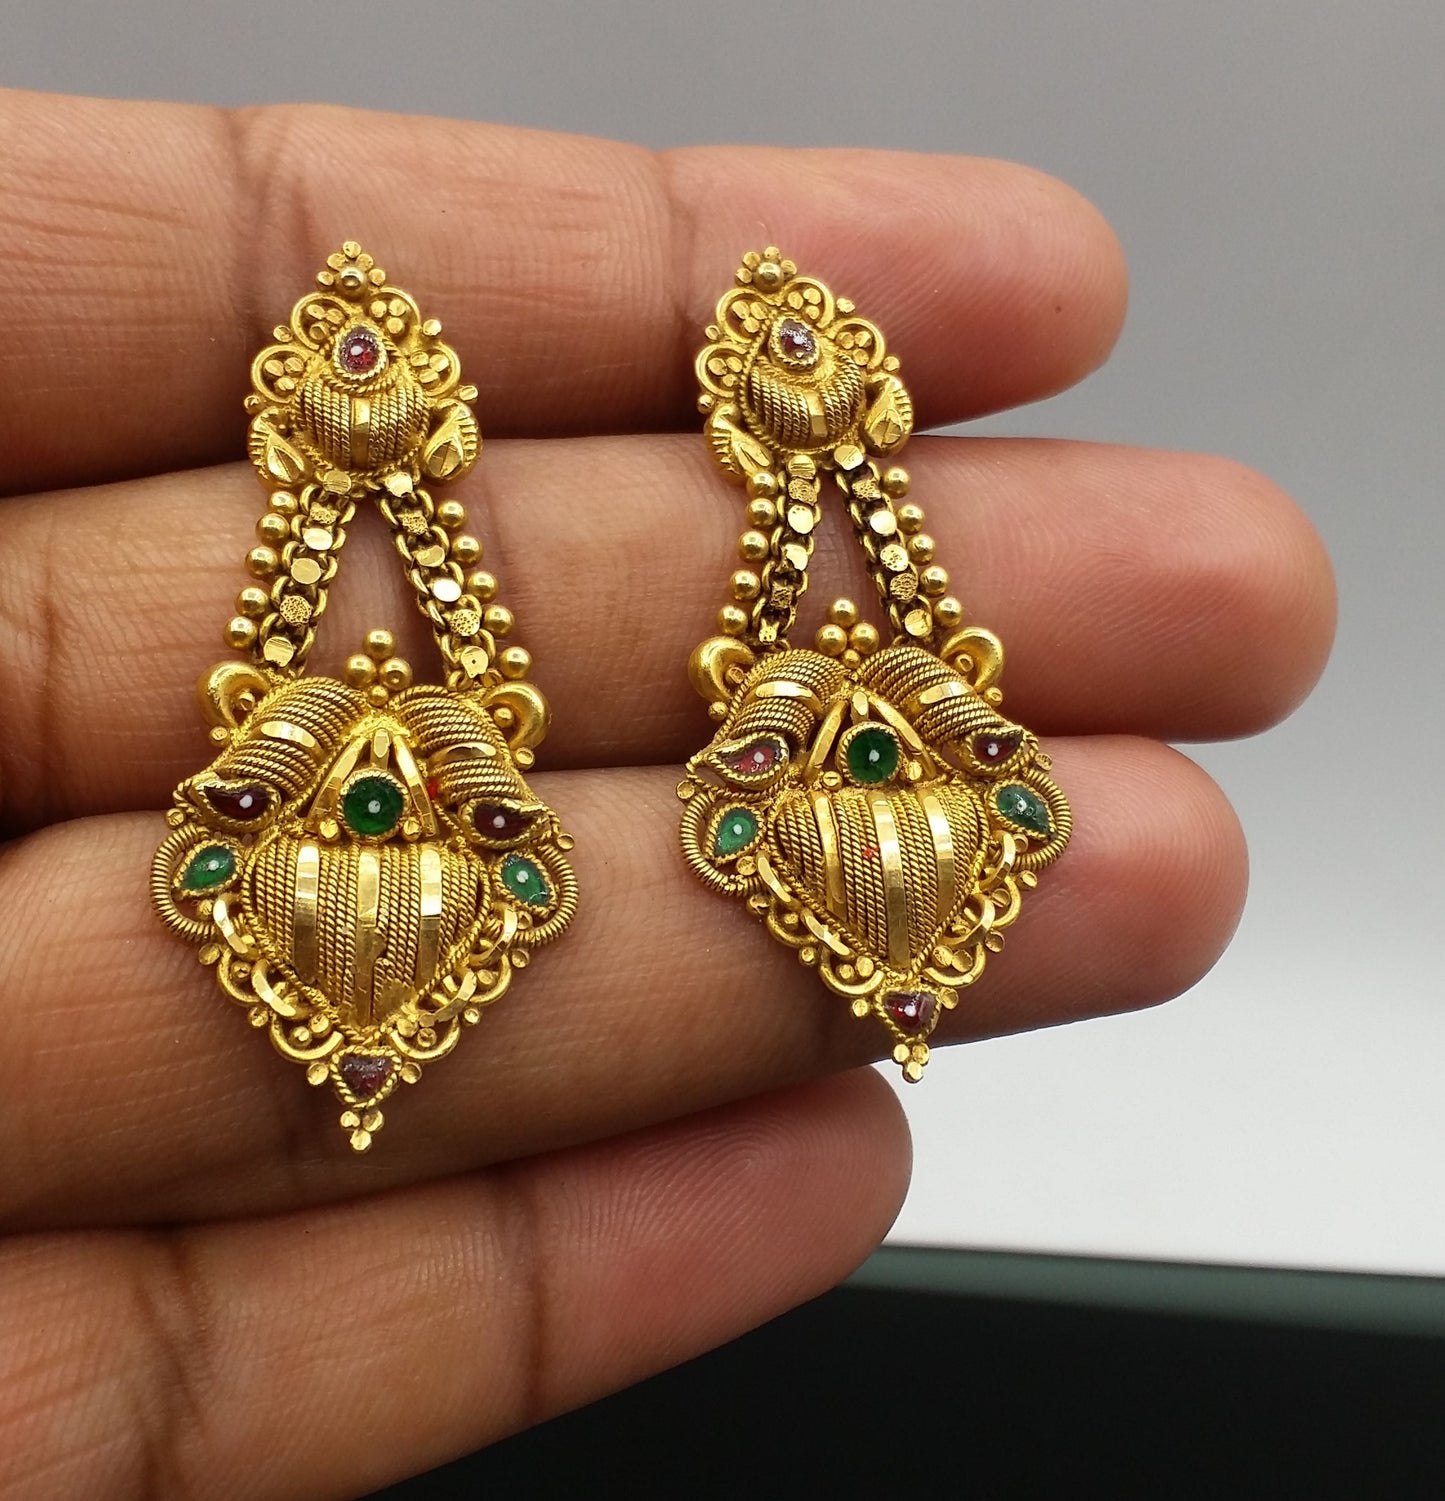 22carat karat yellow gold handmade filigree work stud earring fabulous indian traditional design earring jewelry - TRIBAL ORNAMENTS